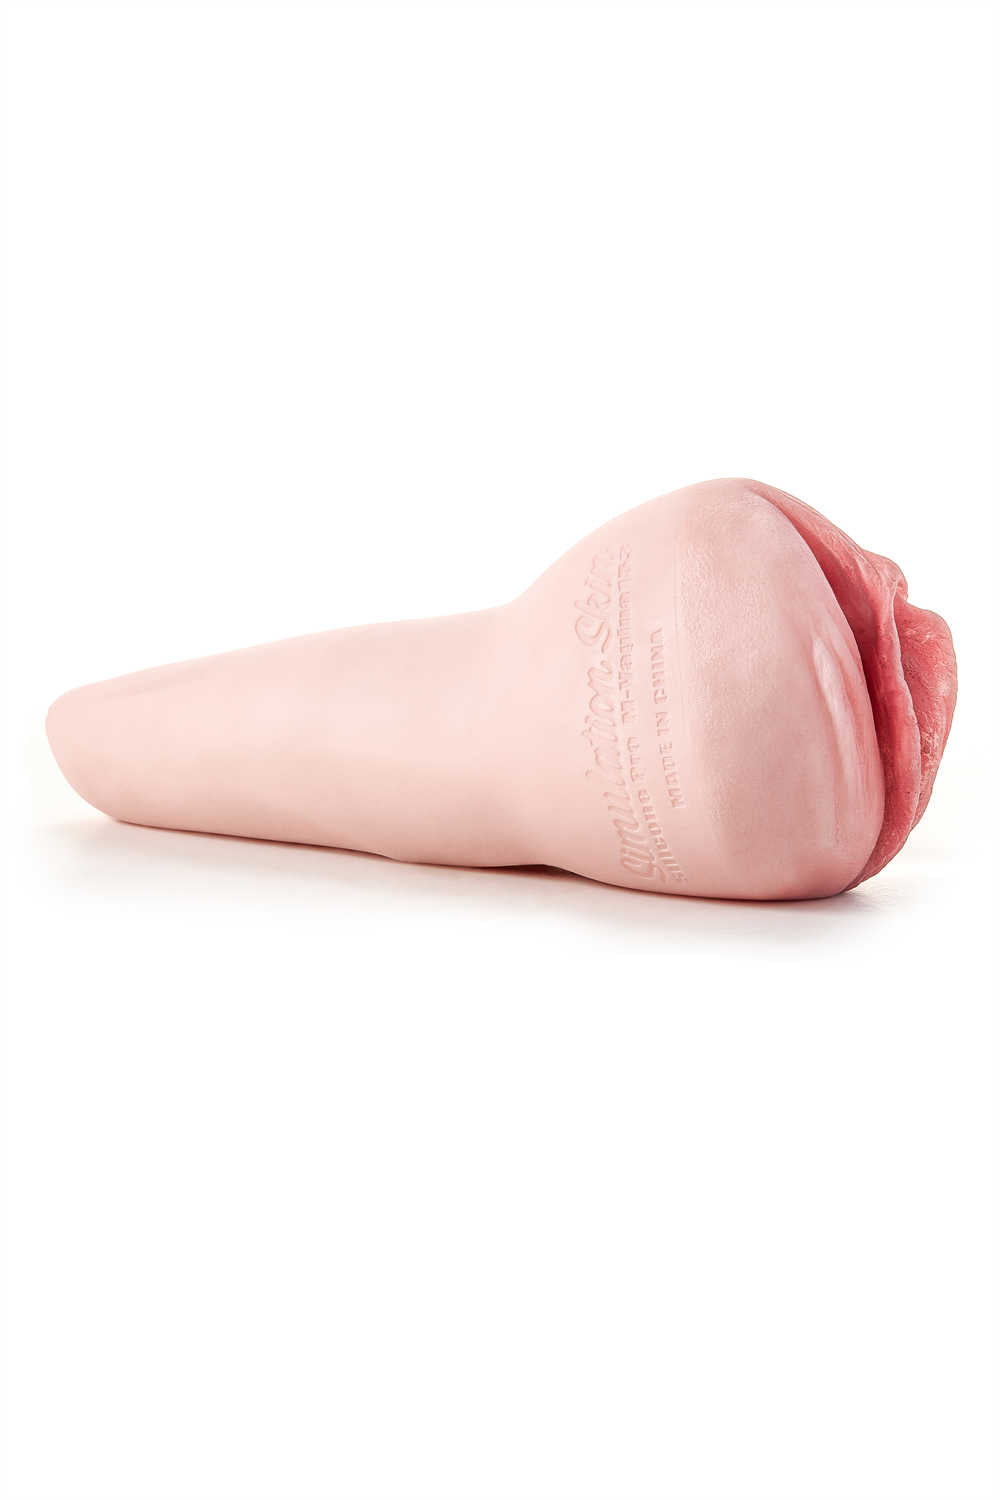 CLIMAX DOLL - Silicone Masturbation Cup Vagina 153